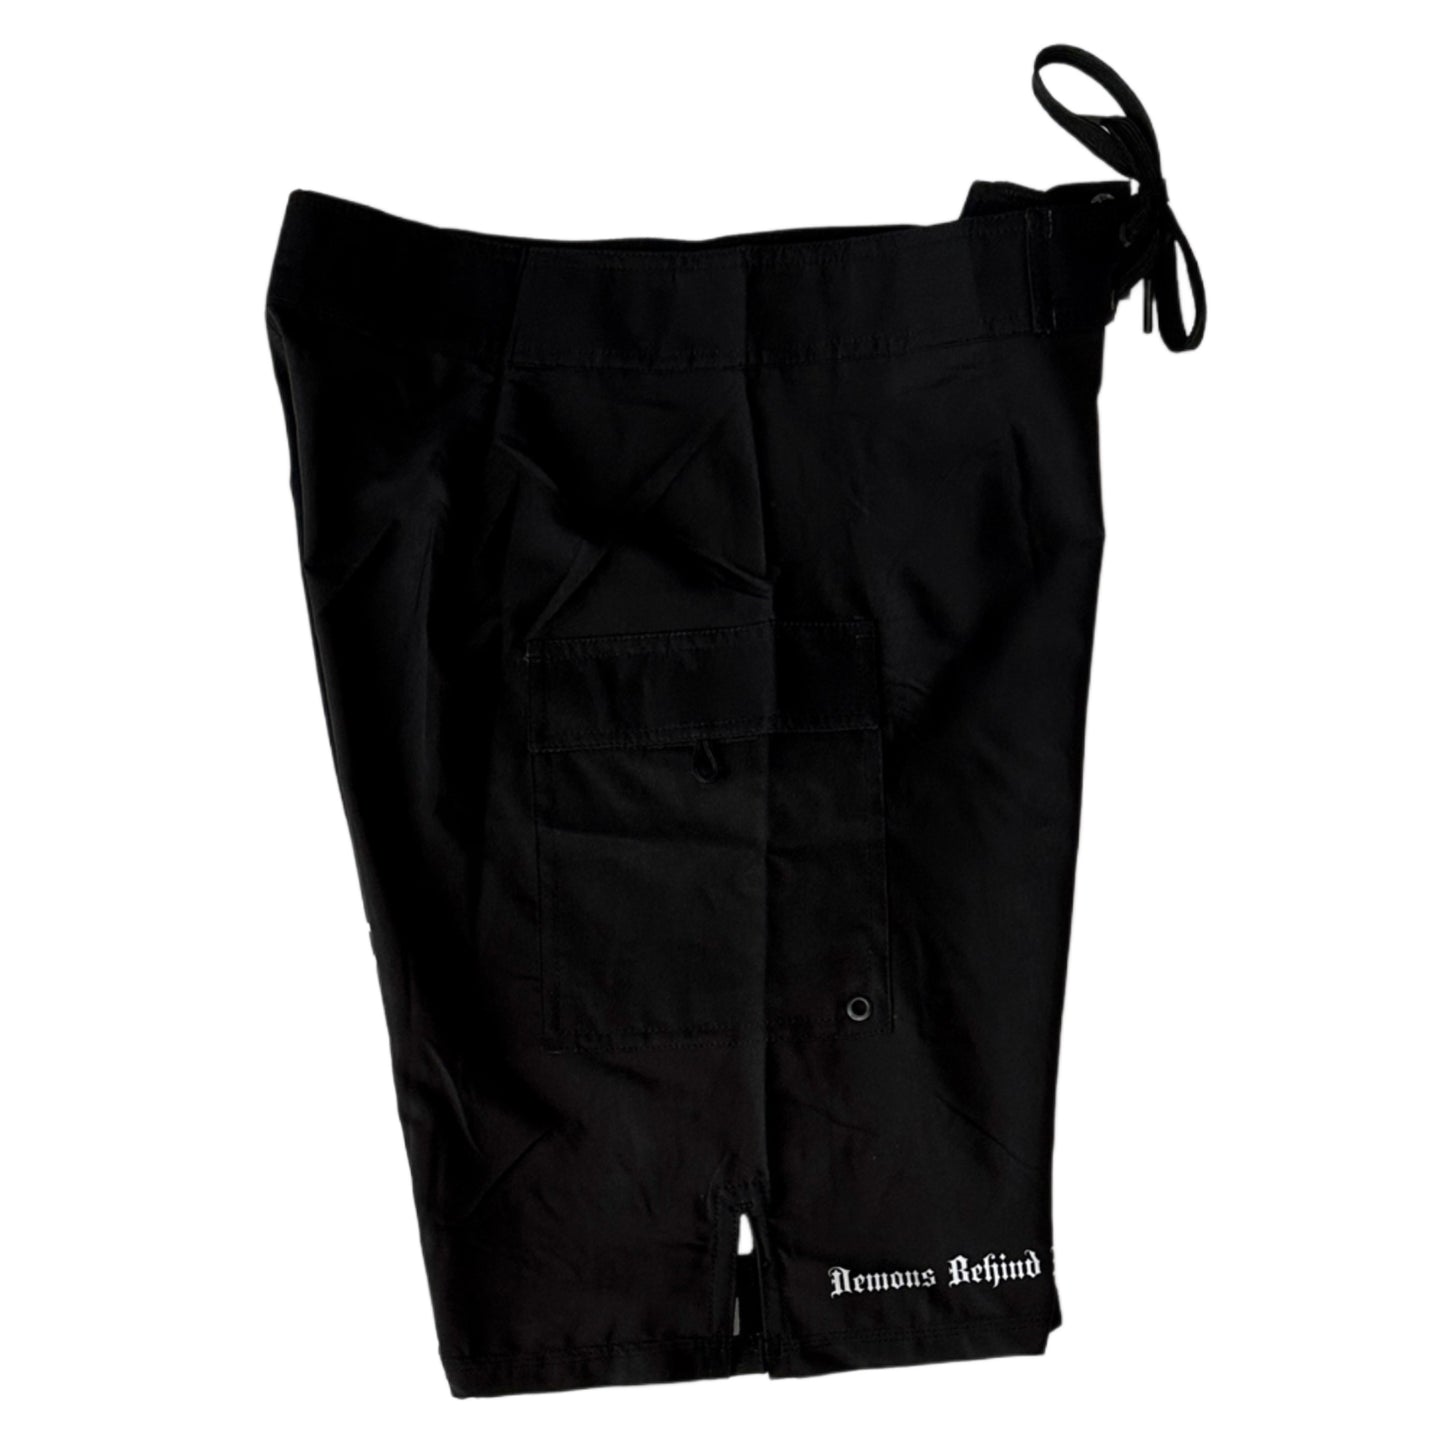 NEW! Premium Black Stretch Board Shorts - Patriotic Logo